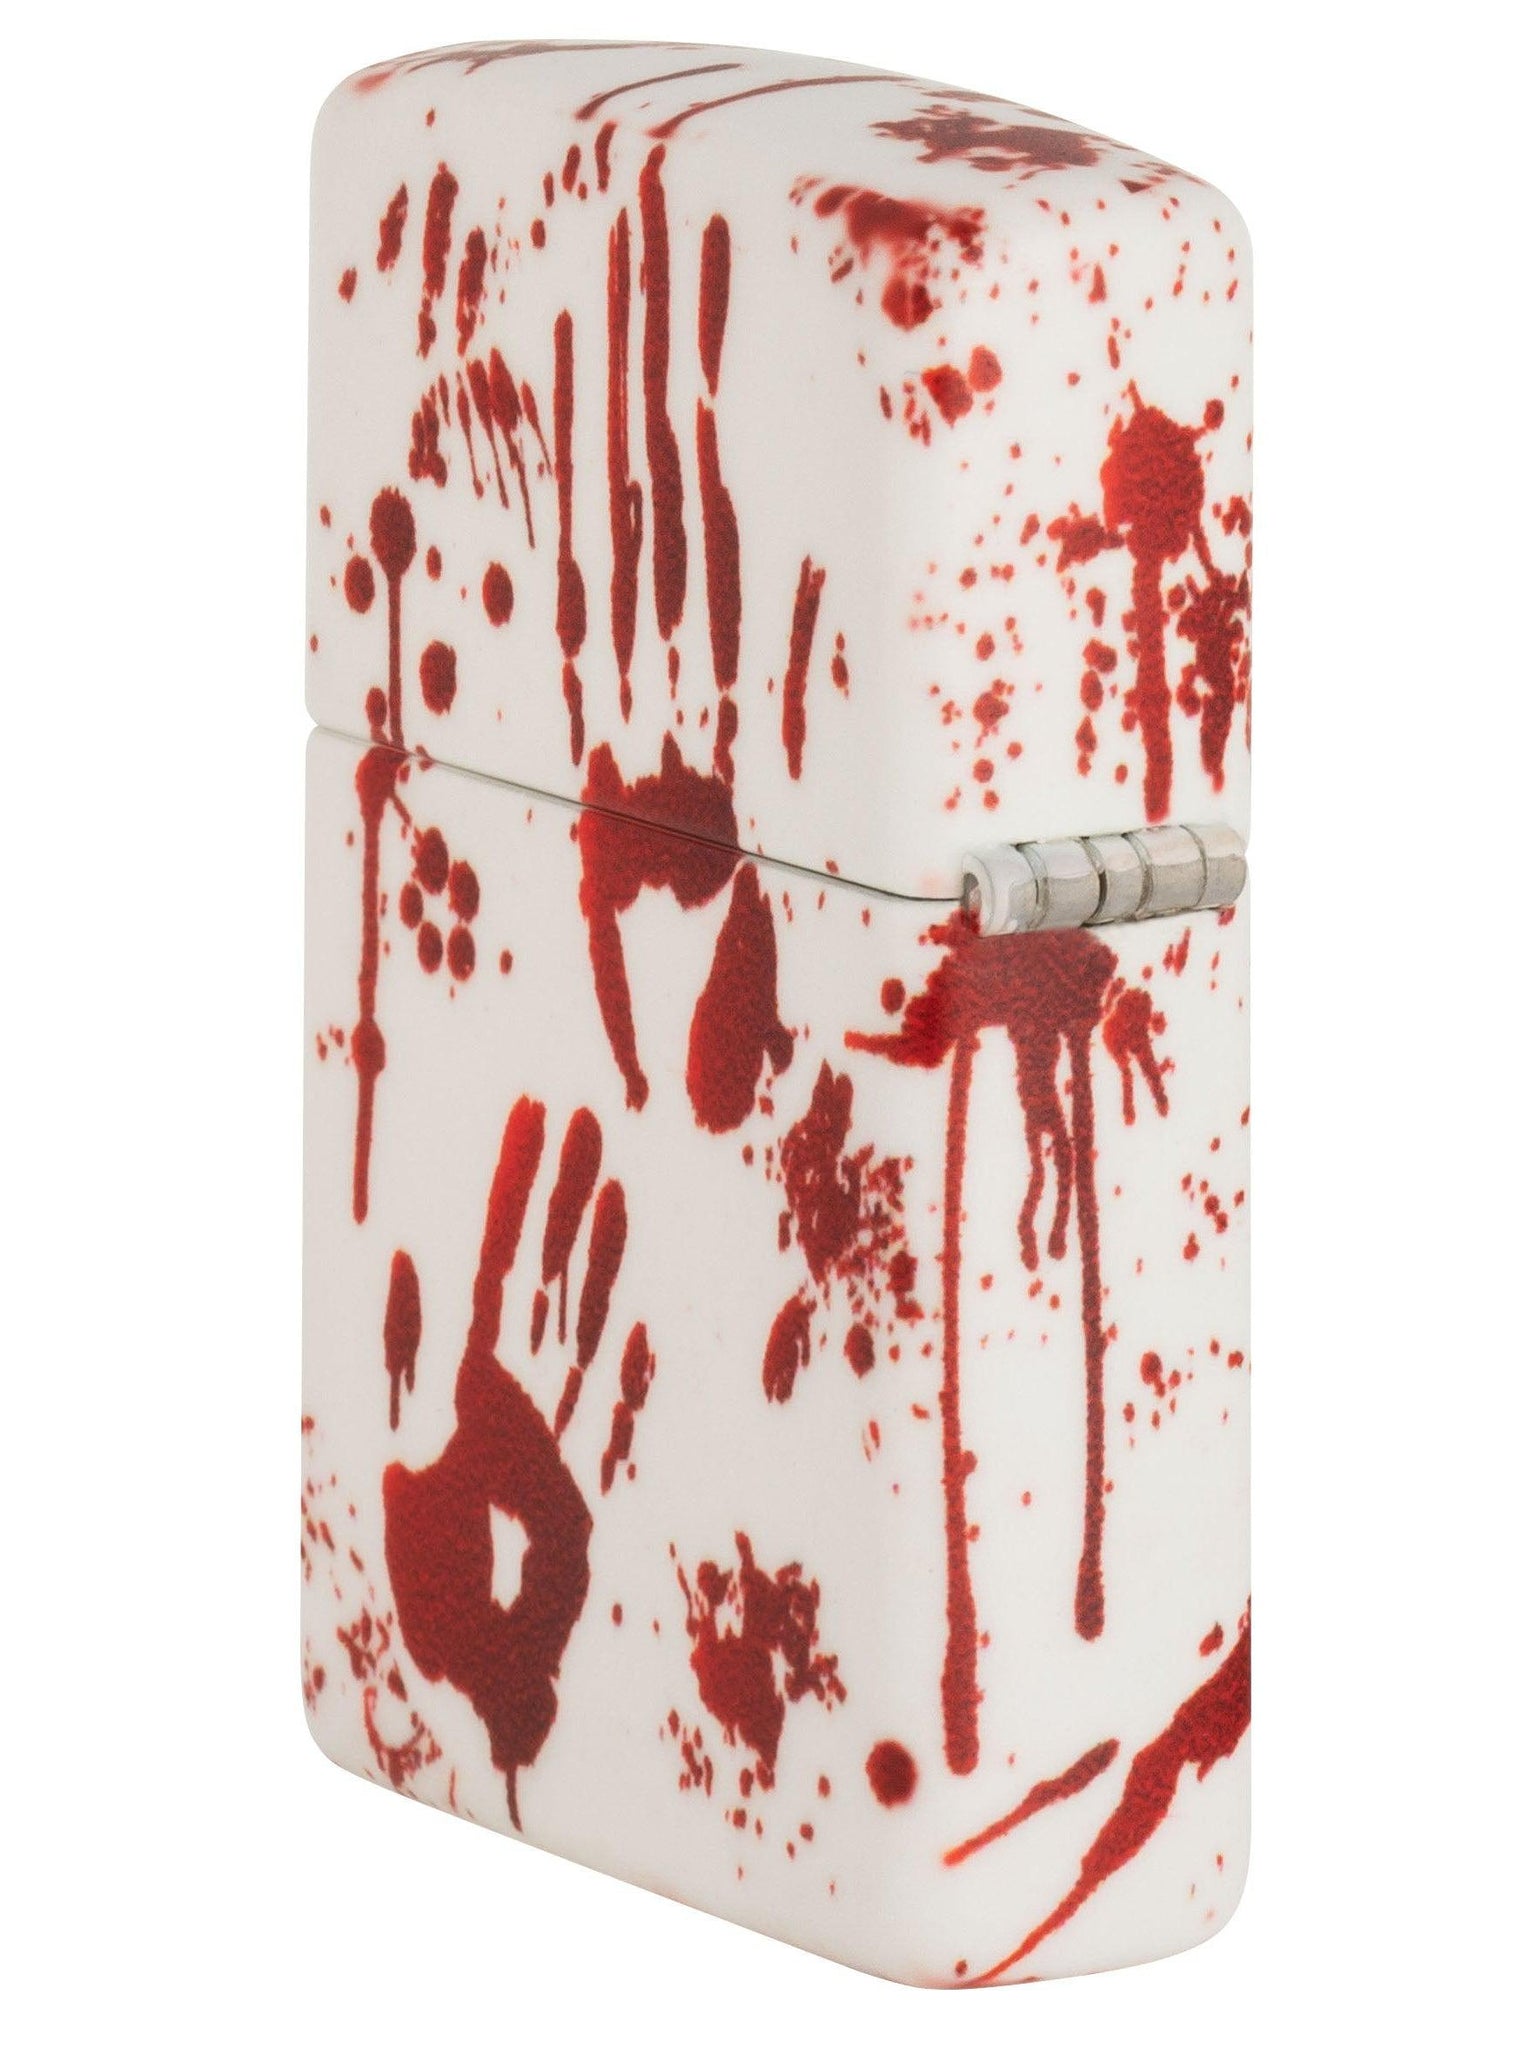 Zippo Lighter: Bloody Hand Prints, 540 Color - Matte 49808